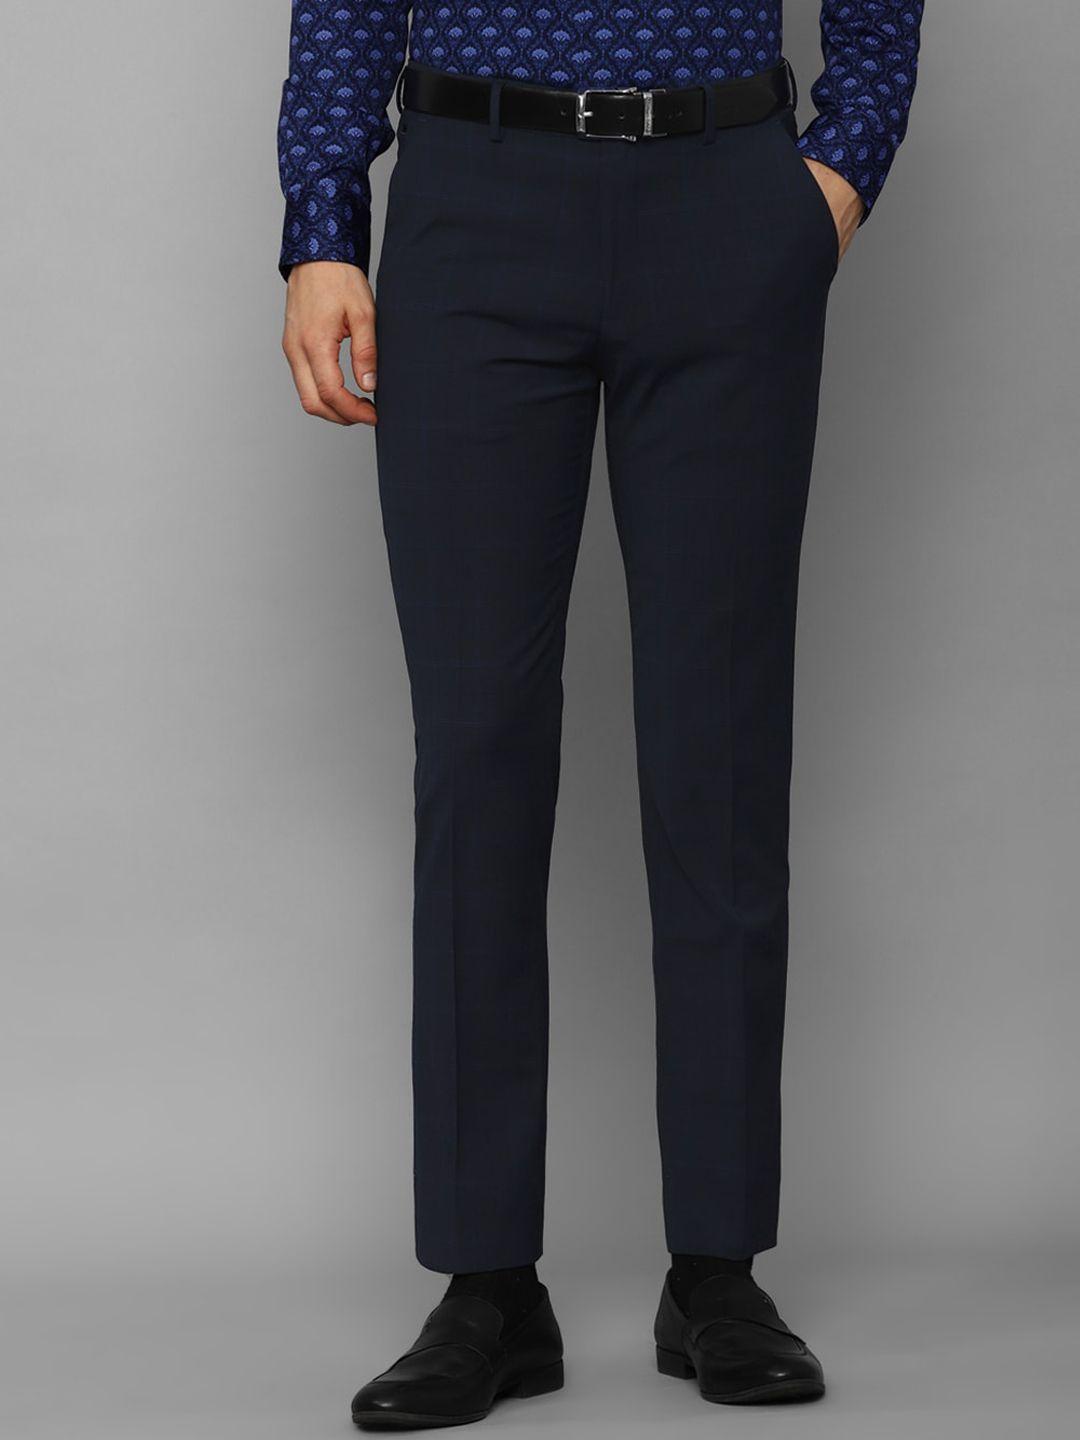 louis philippe mid-rise slim fit plain formal trousers